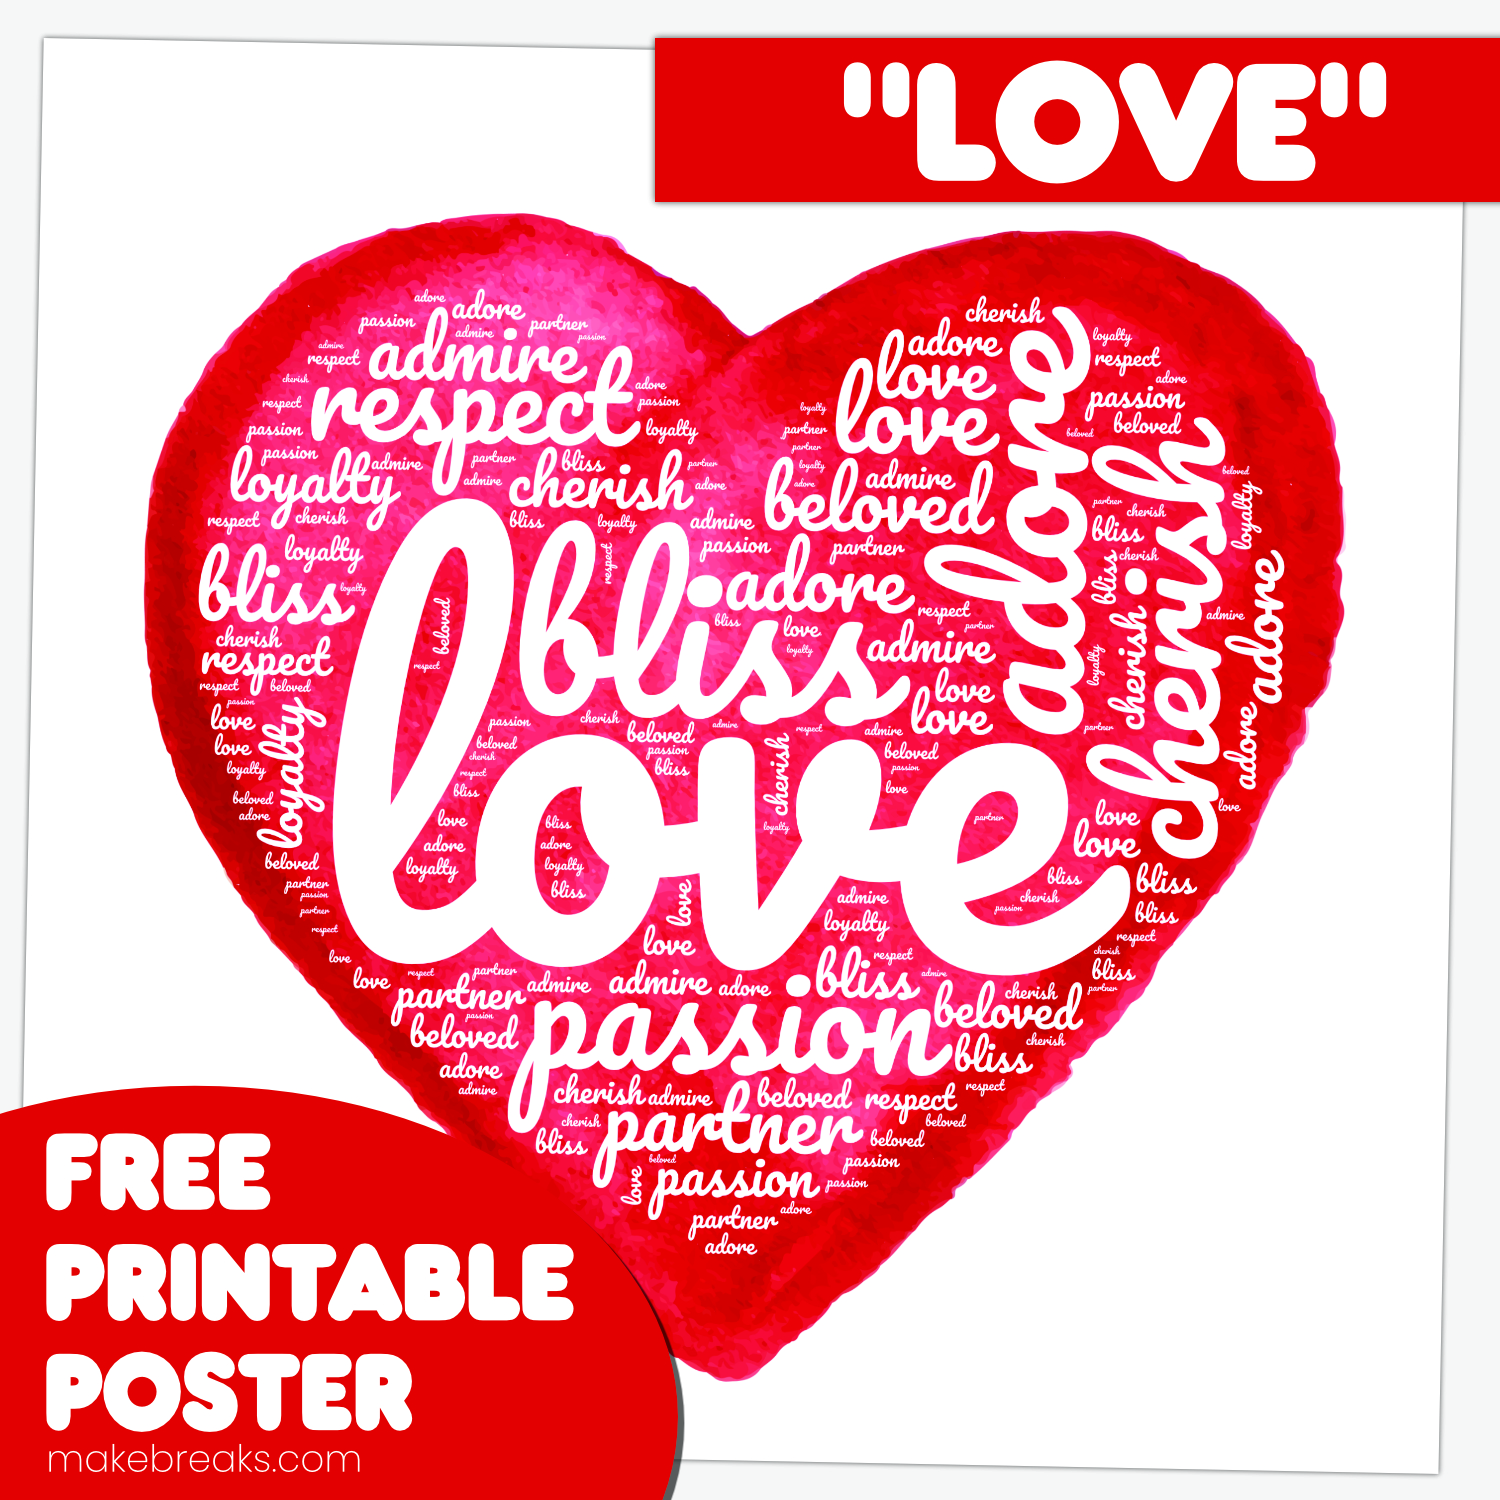 Free Printable ‘Love’ Word Cloud Poster